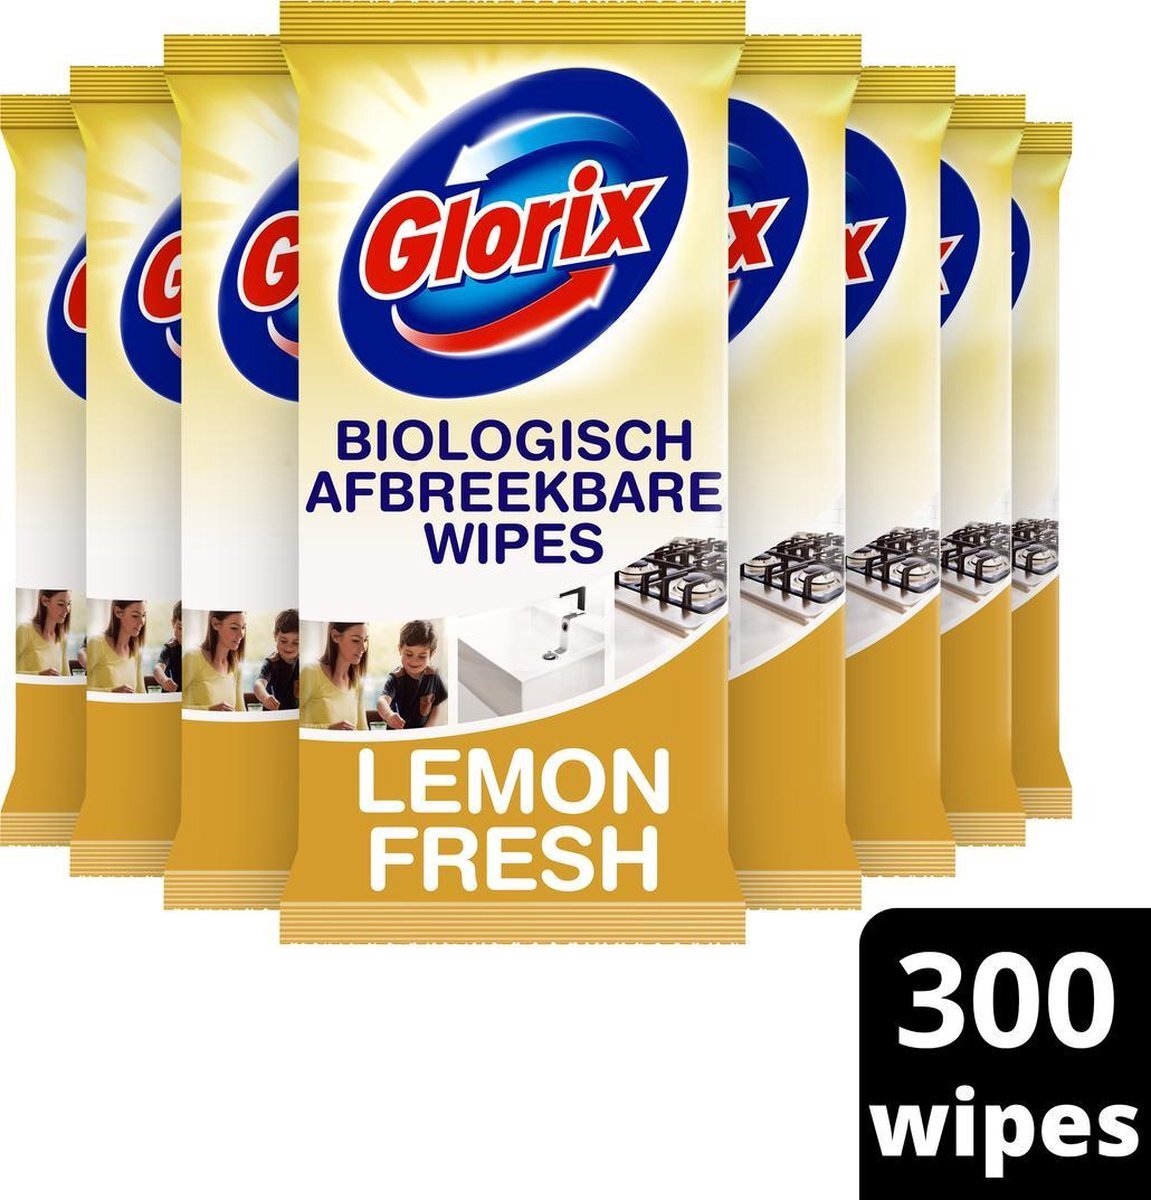 Glorix Lemon Fresh Biologisch Afbreekbare Schoonmaakdoekjes